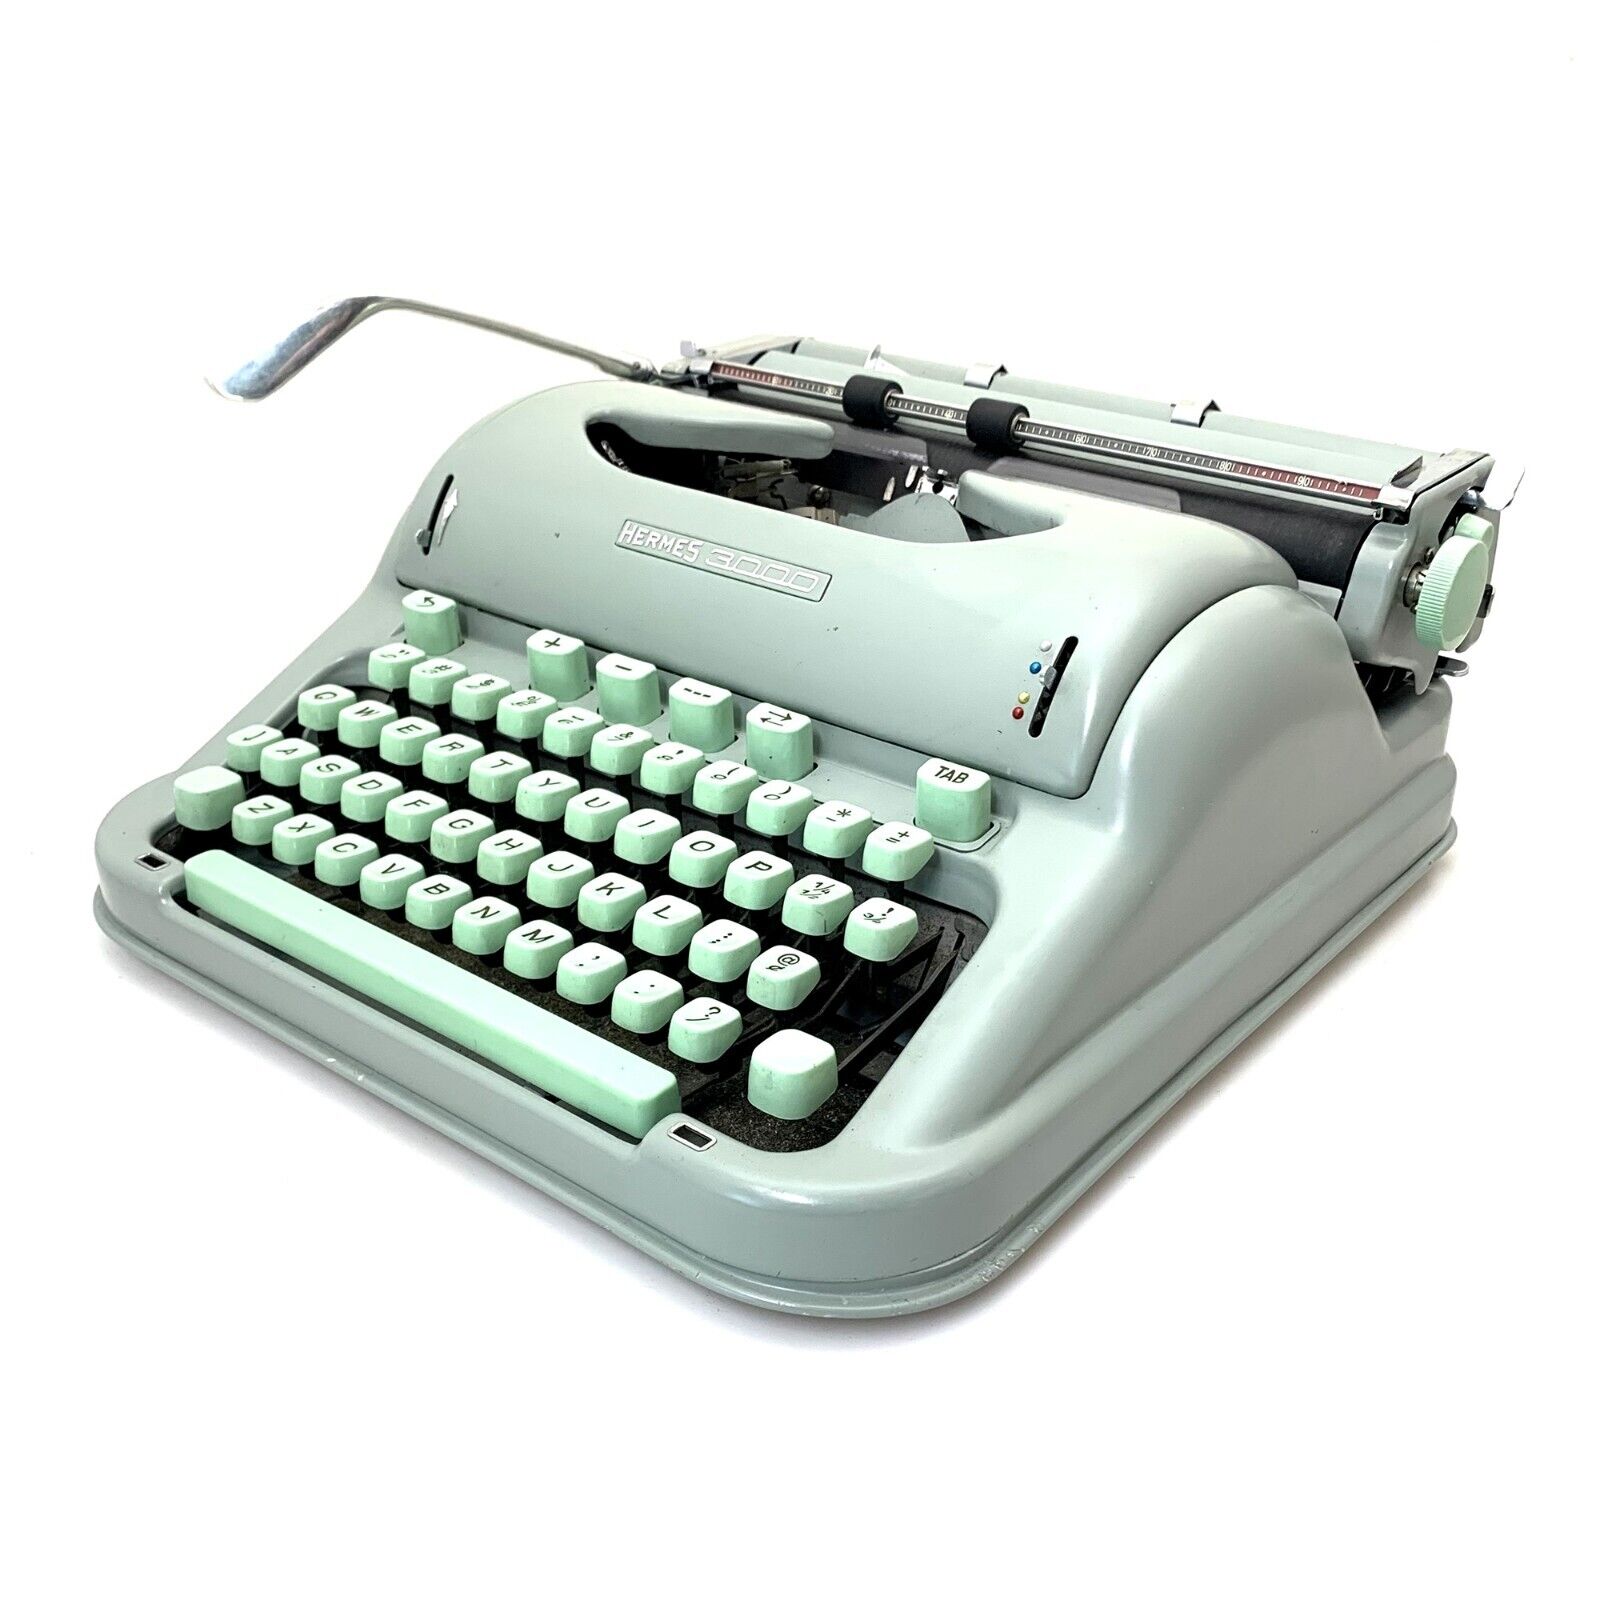 1963 Hermes 3000 Typewriter w/Case Working Seafoam Green Pica Portable Vtg